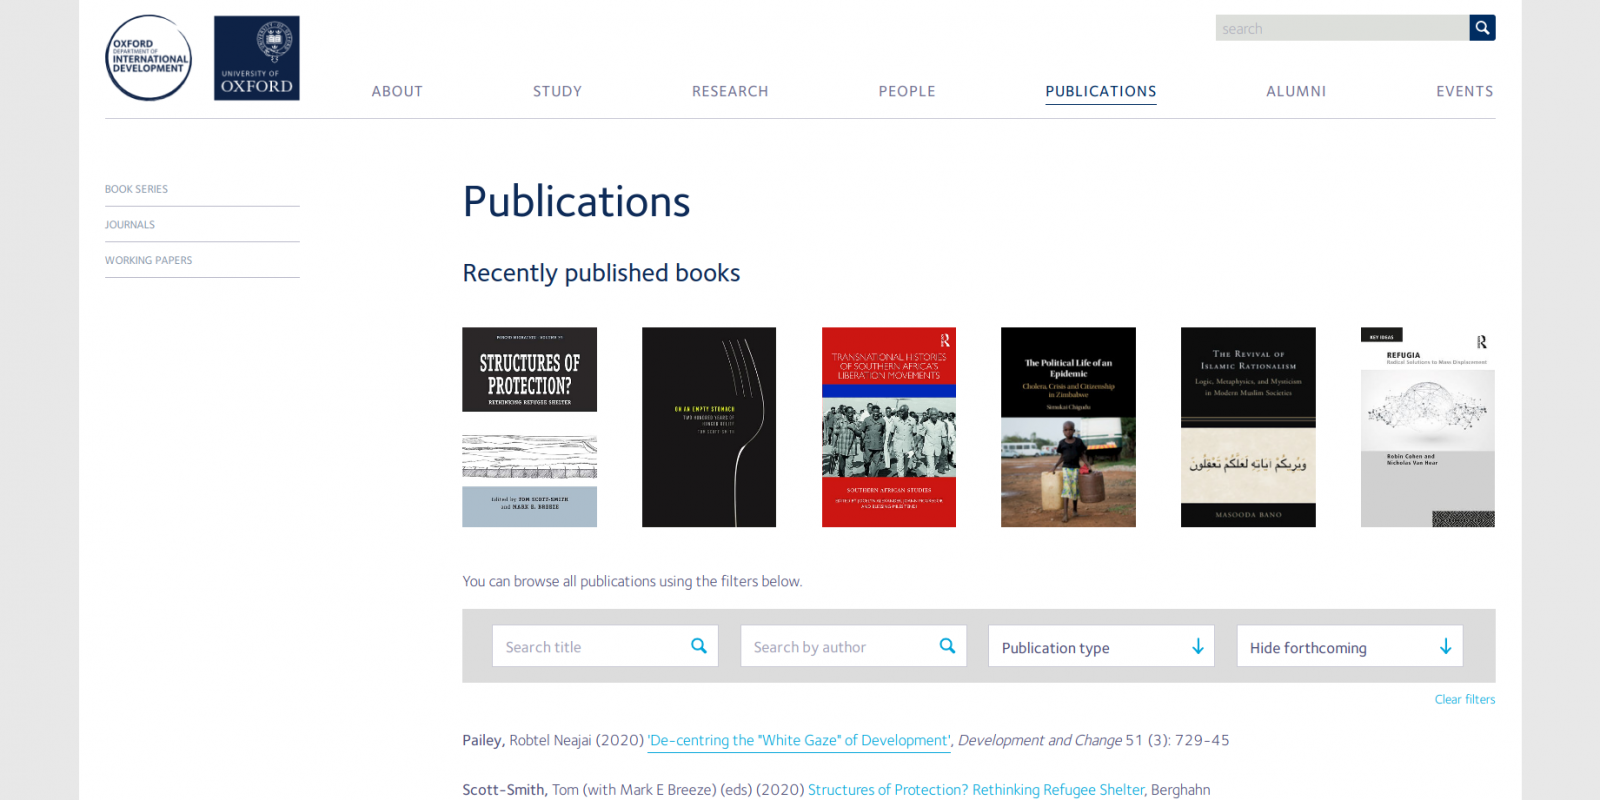 Oxford Department of International Development - website - publications page